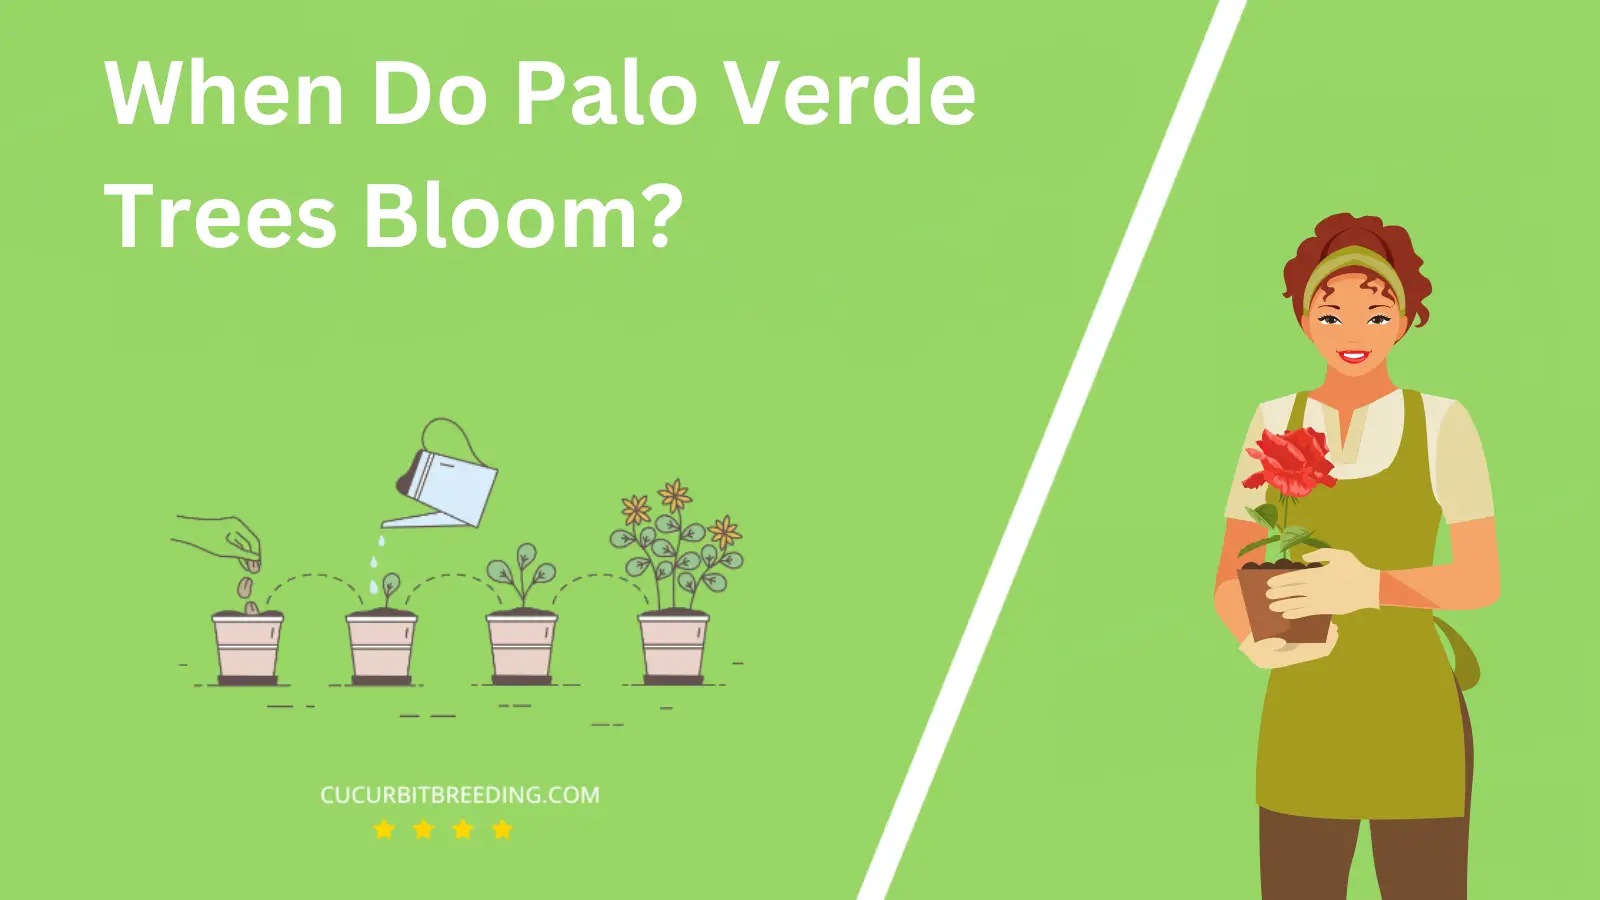 When Do Palo Verde Trees Bloom?